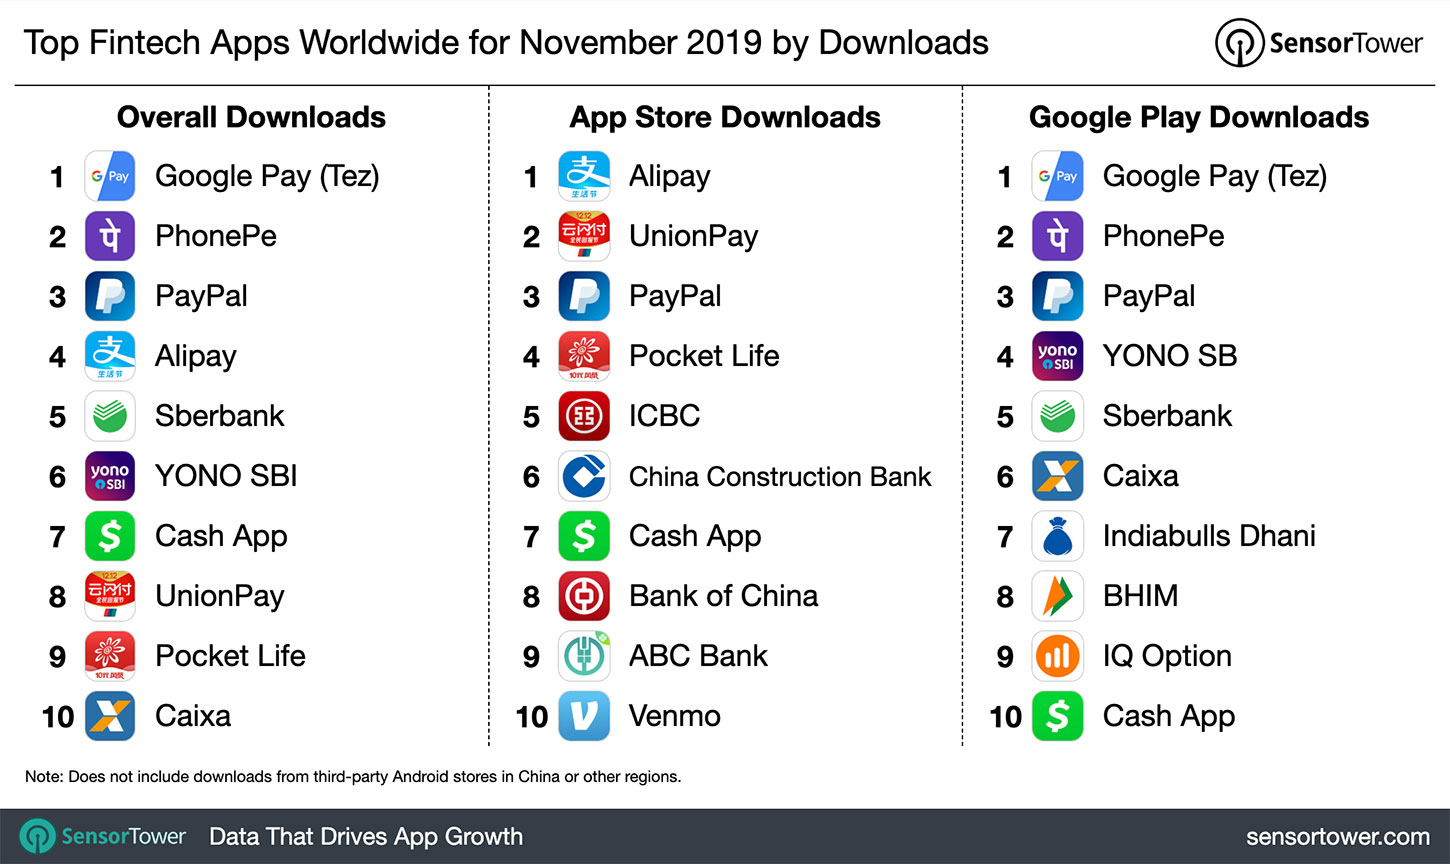 Top Fintech Apps Worldwide for November 2019 by Downloads